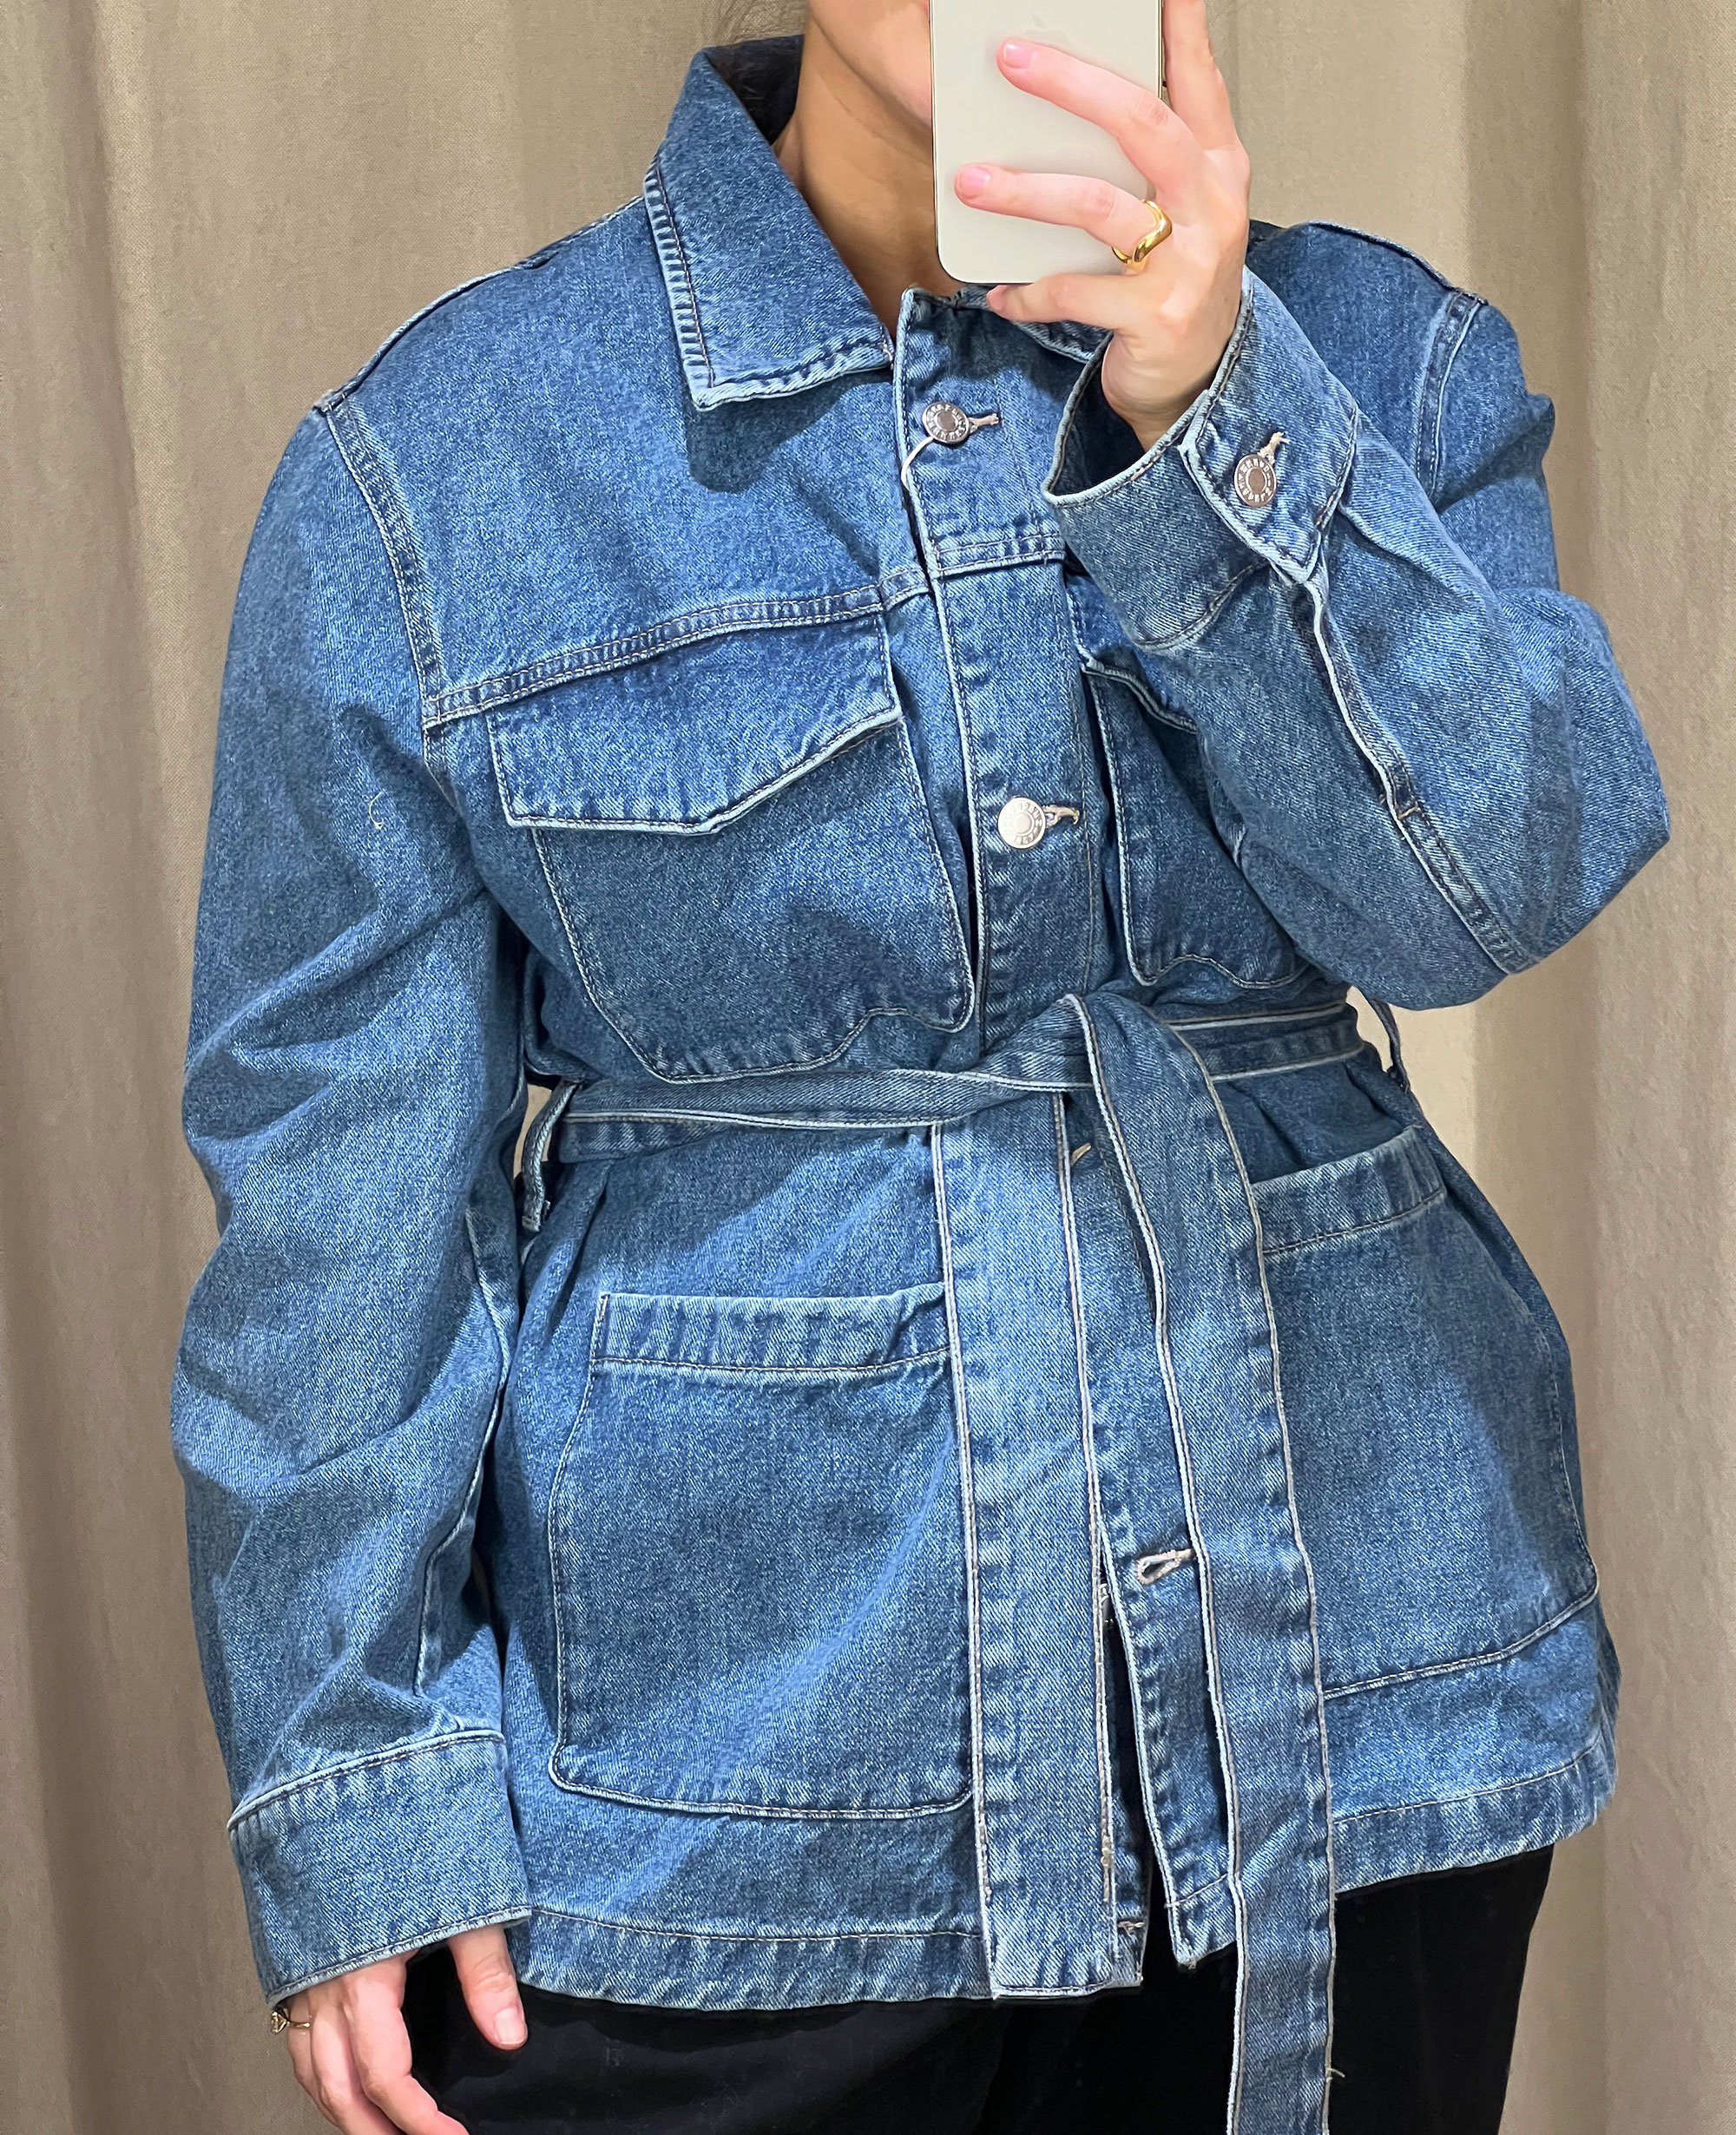 Limited Jeans Womens long sleeve button up blue jean jacket, size Medium |  eBay